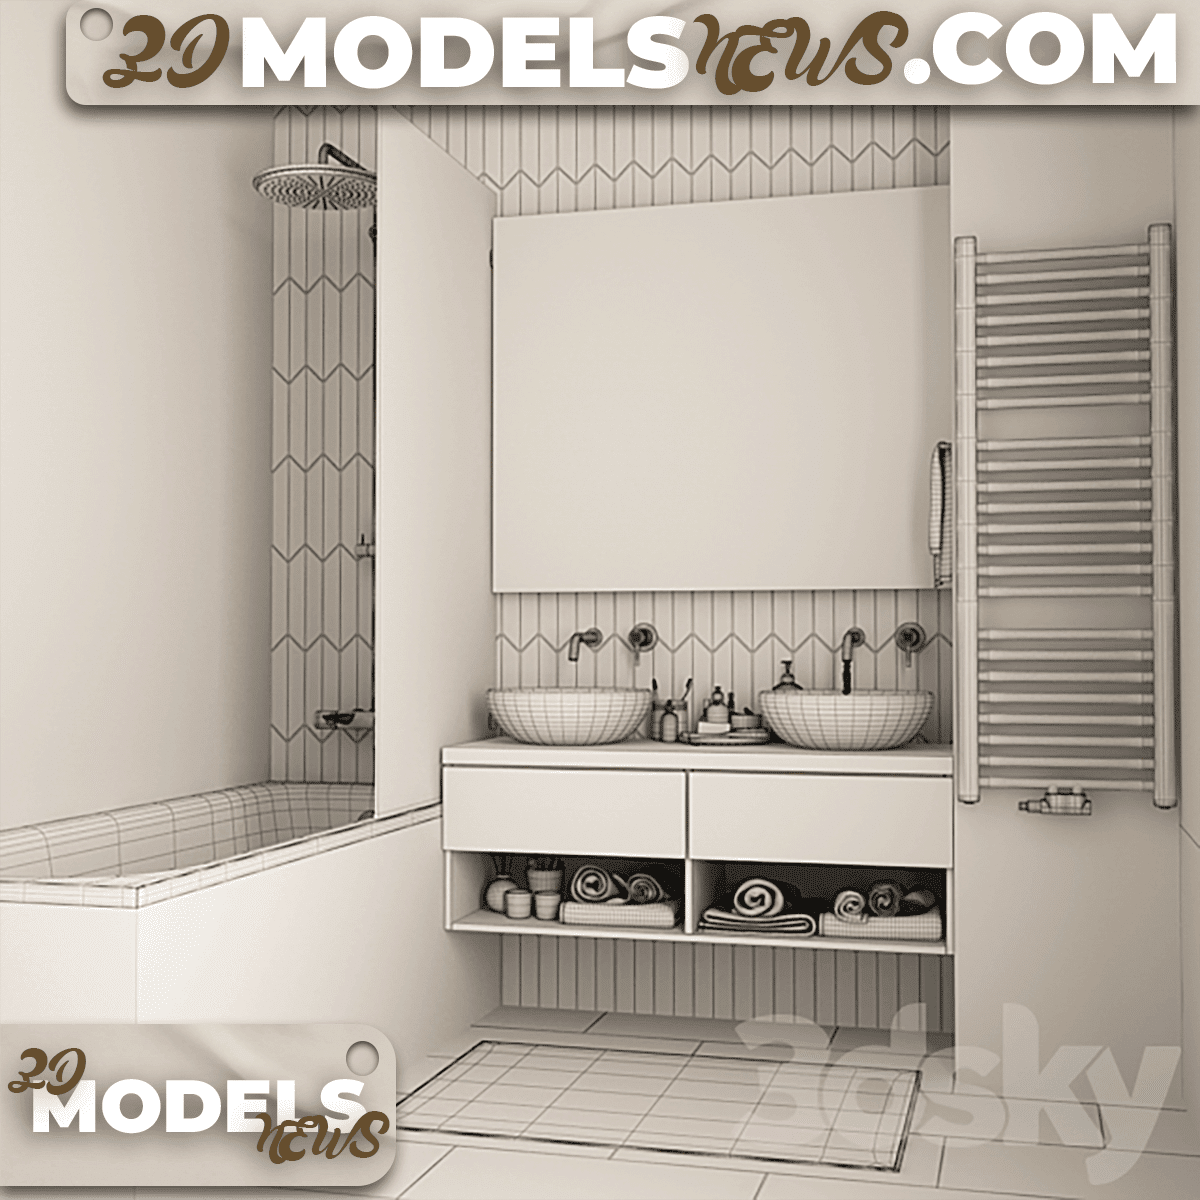 Bathroom Furniture Model 19 5